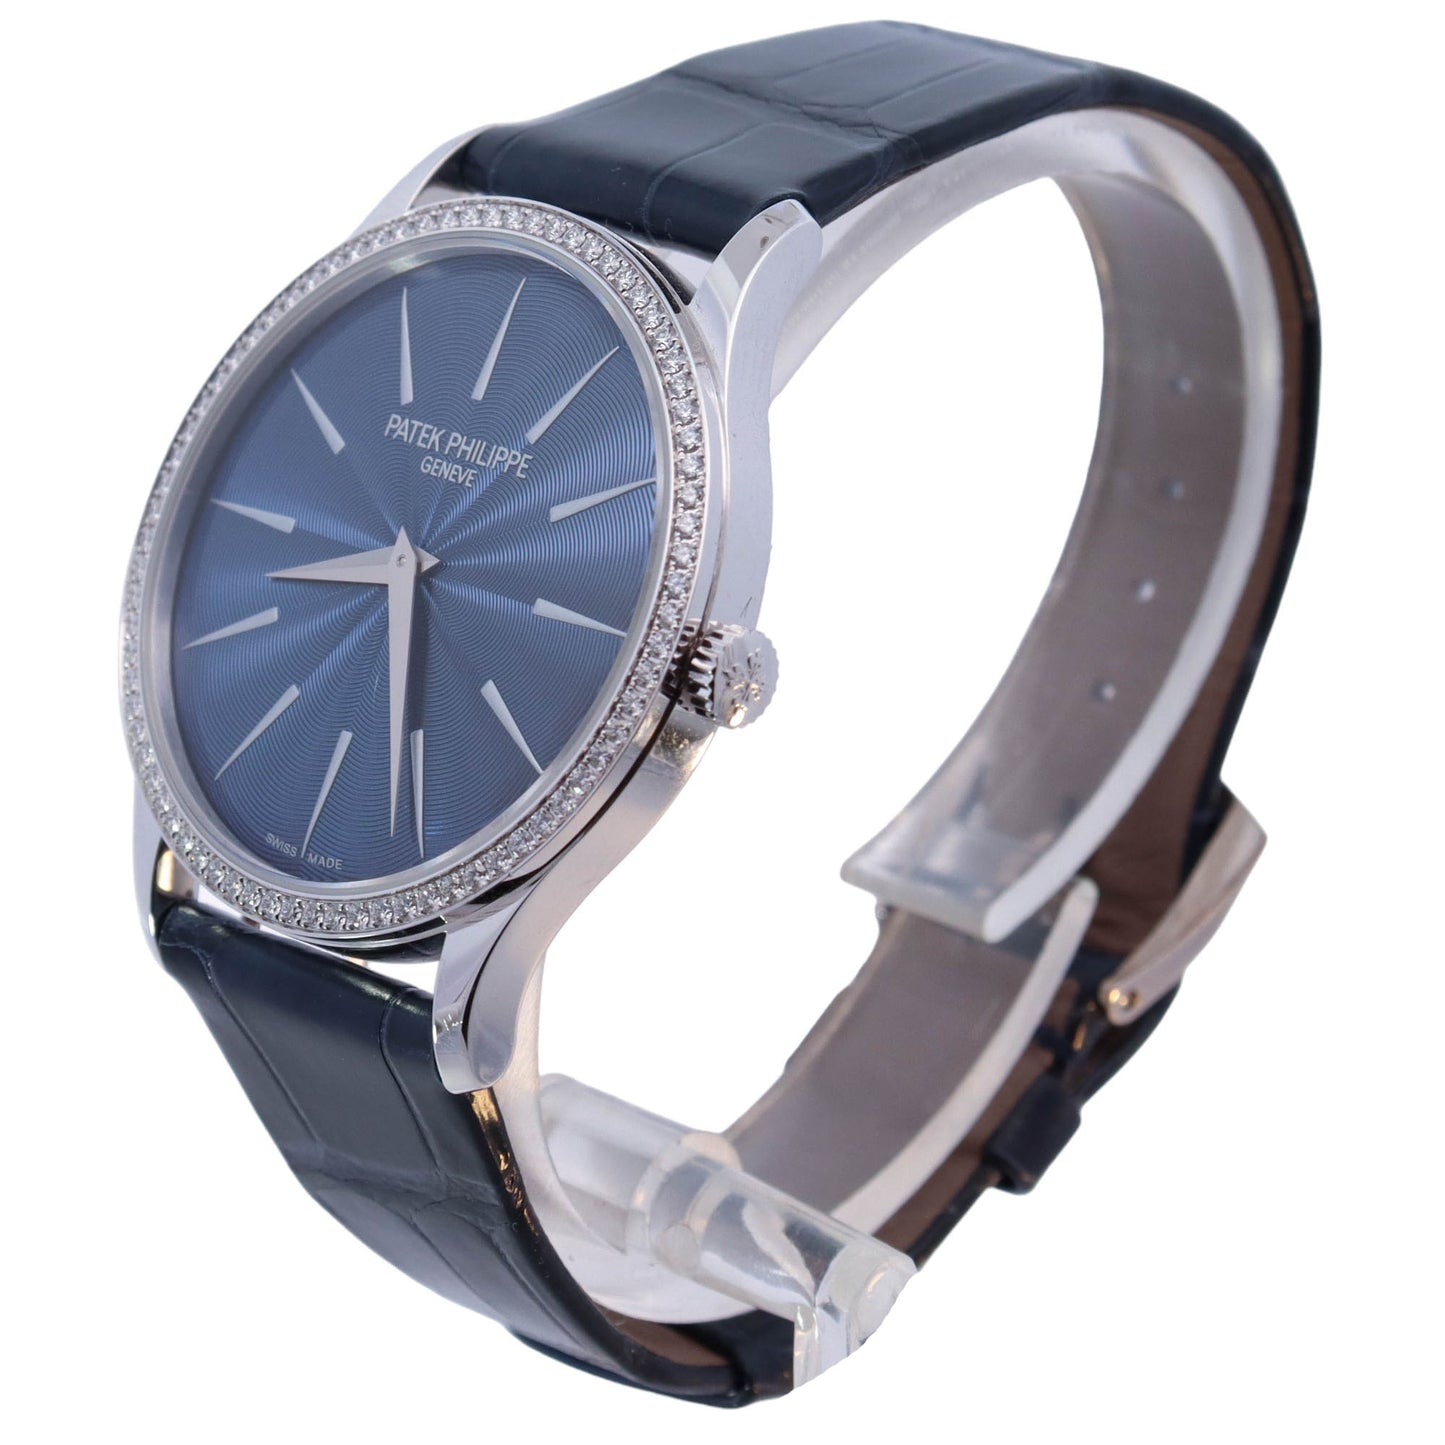 Patek Philippe Calatrava White Gold 35mm Blue Stick Dial Watch Reference# 4997/200G-001 - Happy Jewelers Fine Jewelry Lifetime Warranty